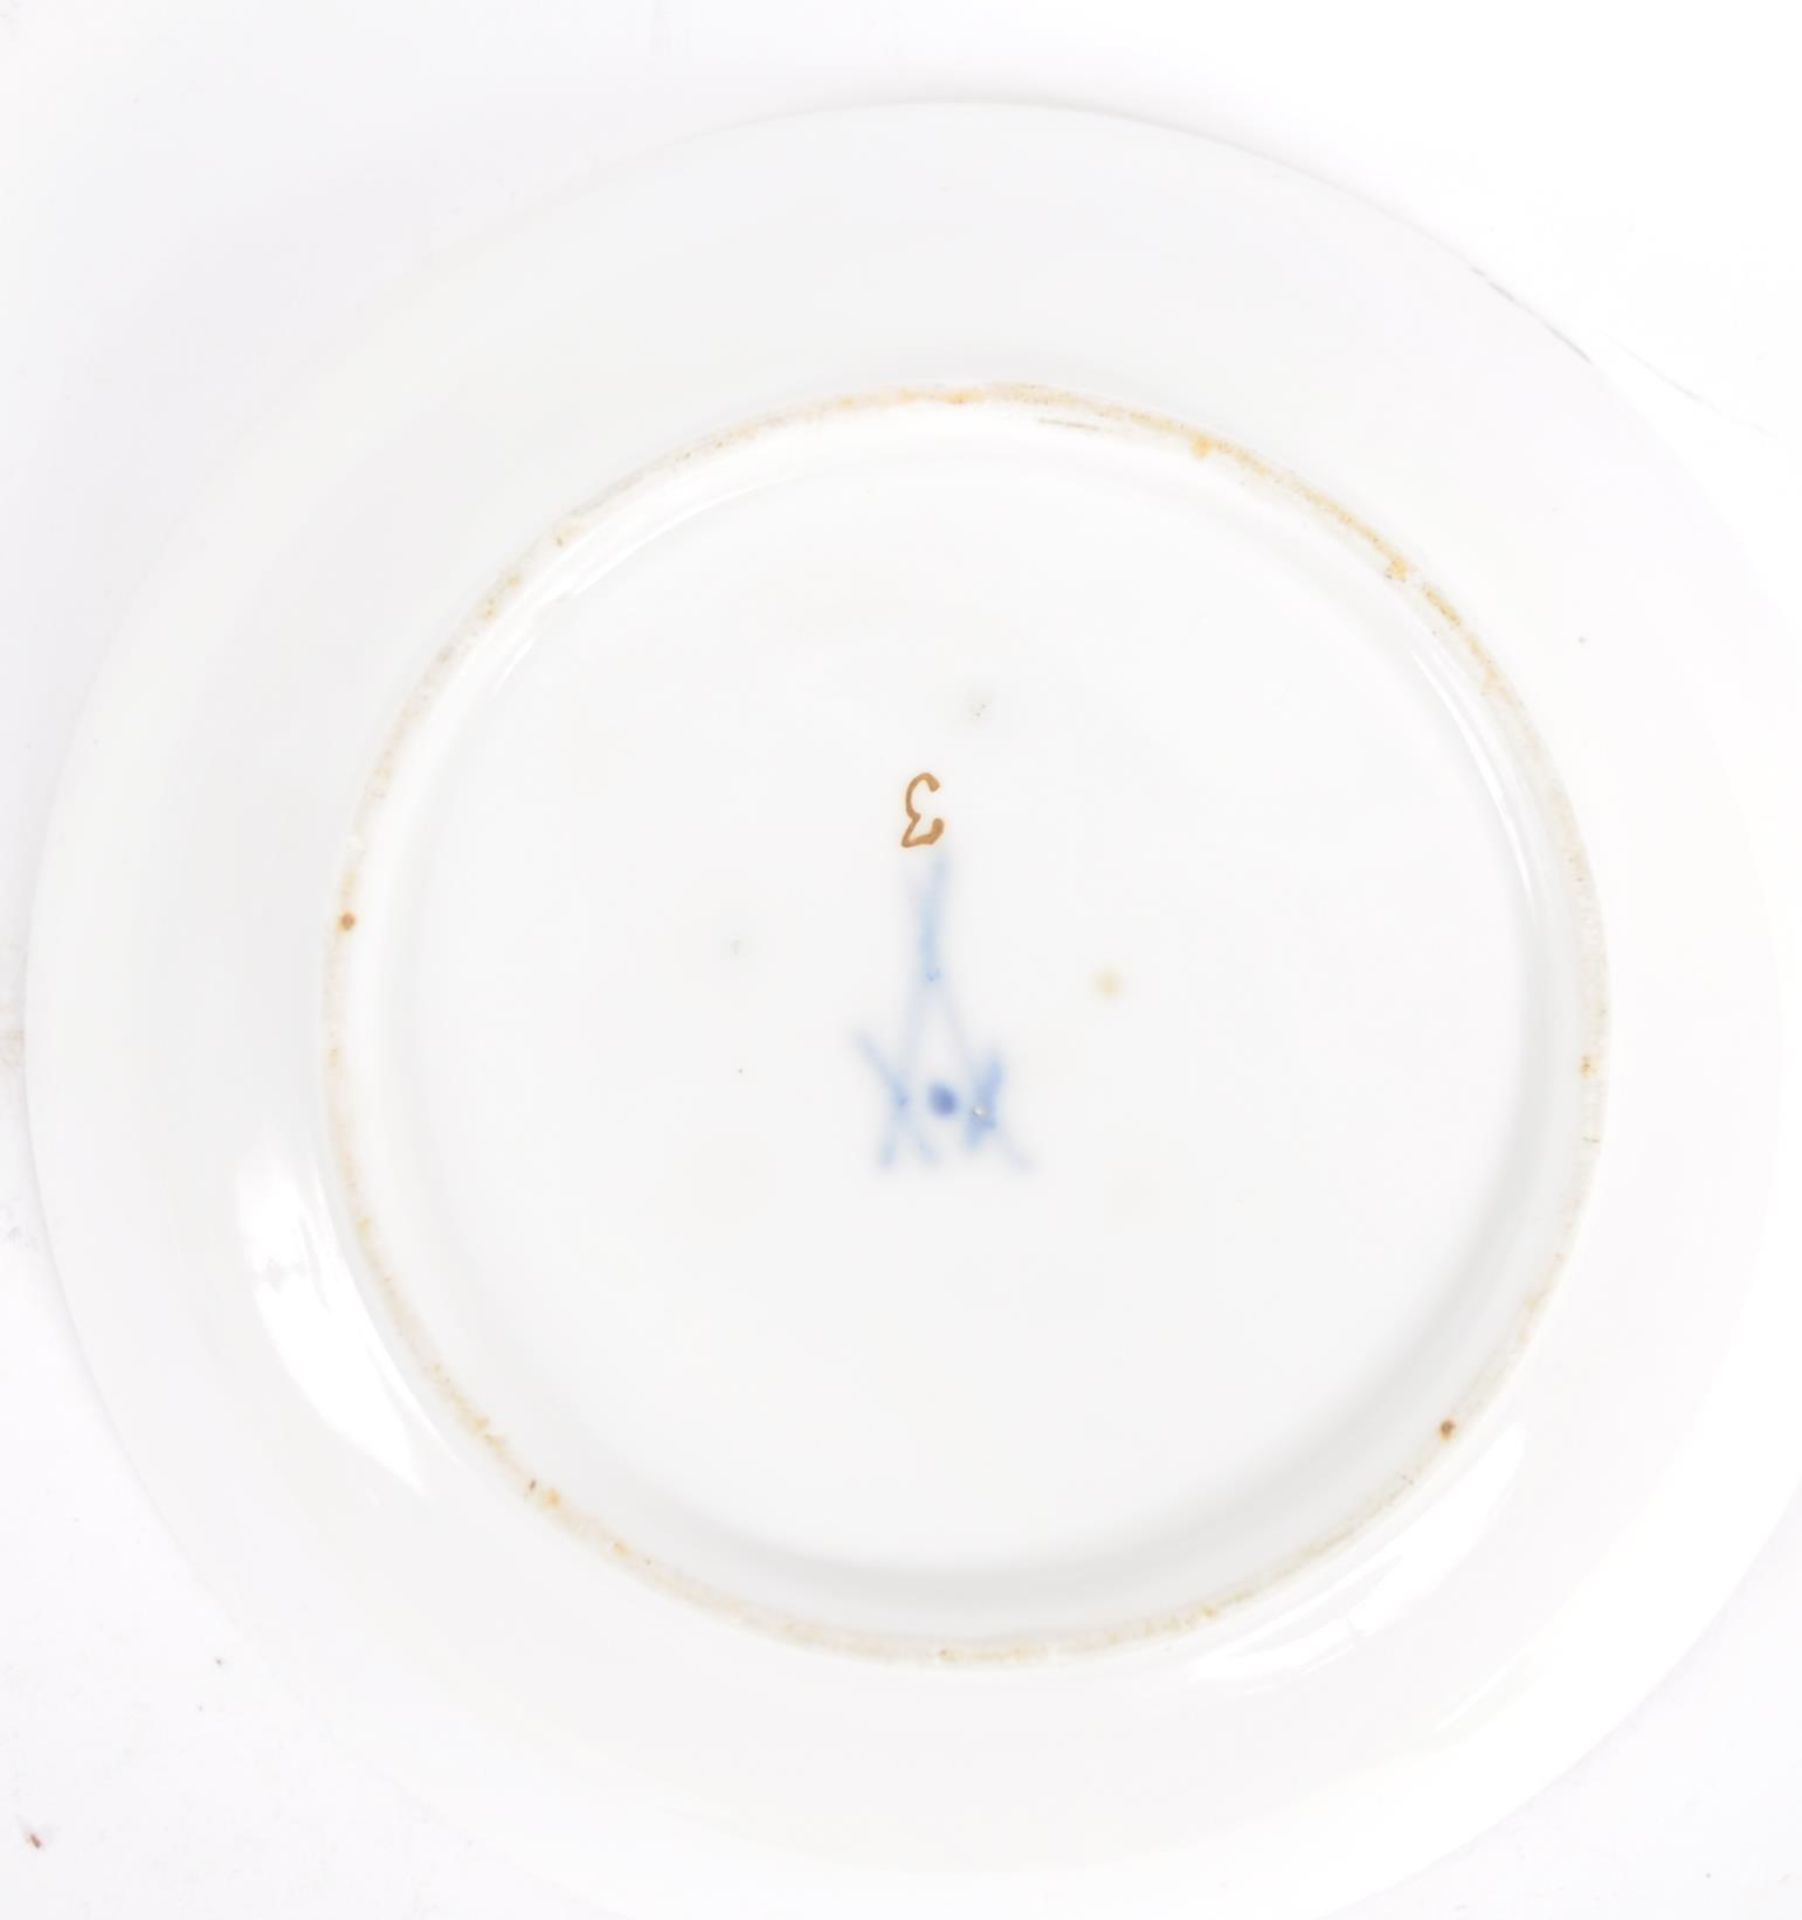 19TH CENTURY MEISSEN BLUE & WHITE PORCELAIN TEA SET - Image 12 of 18